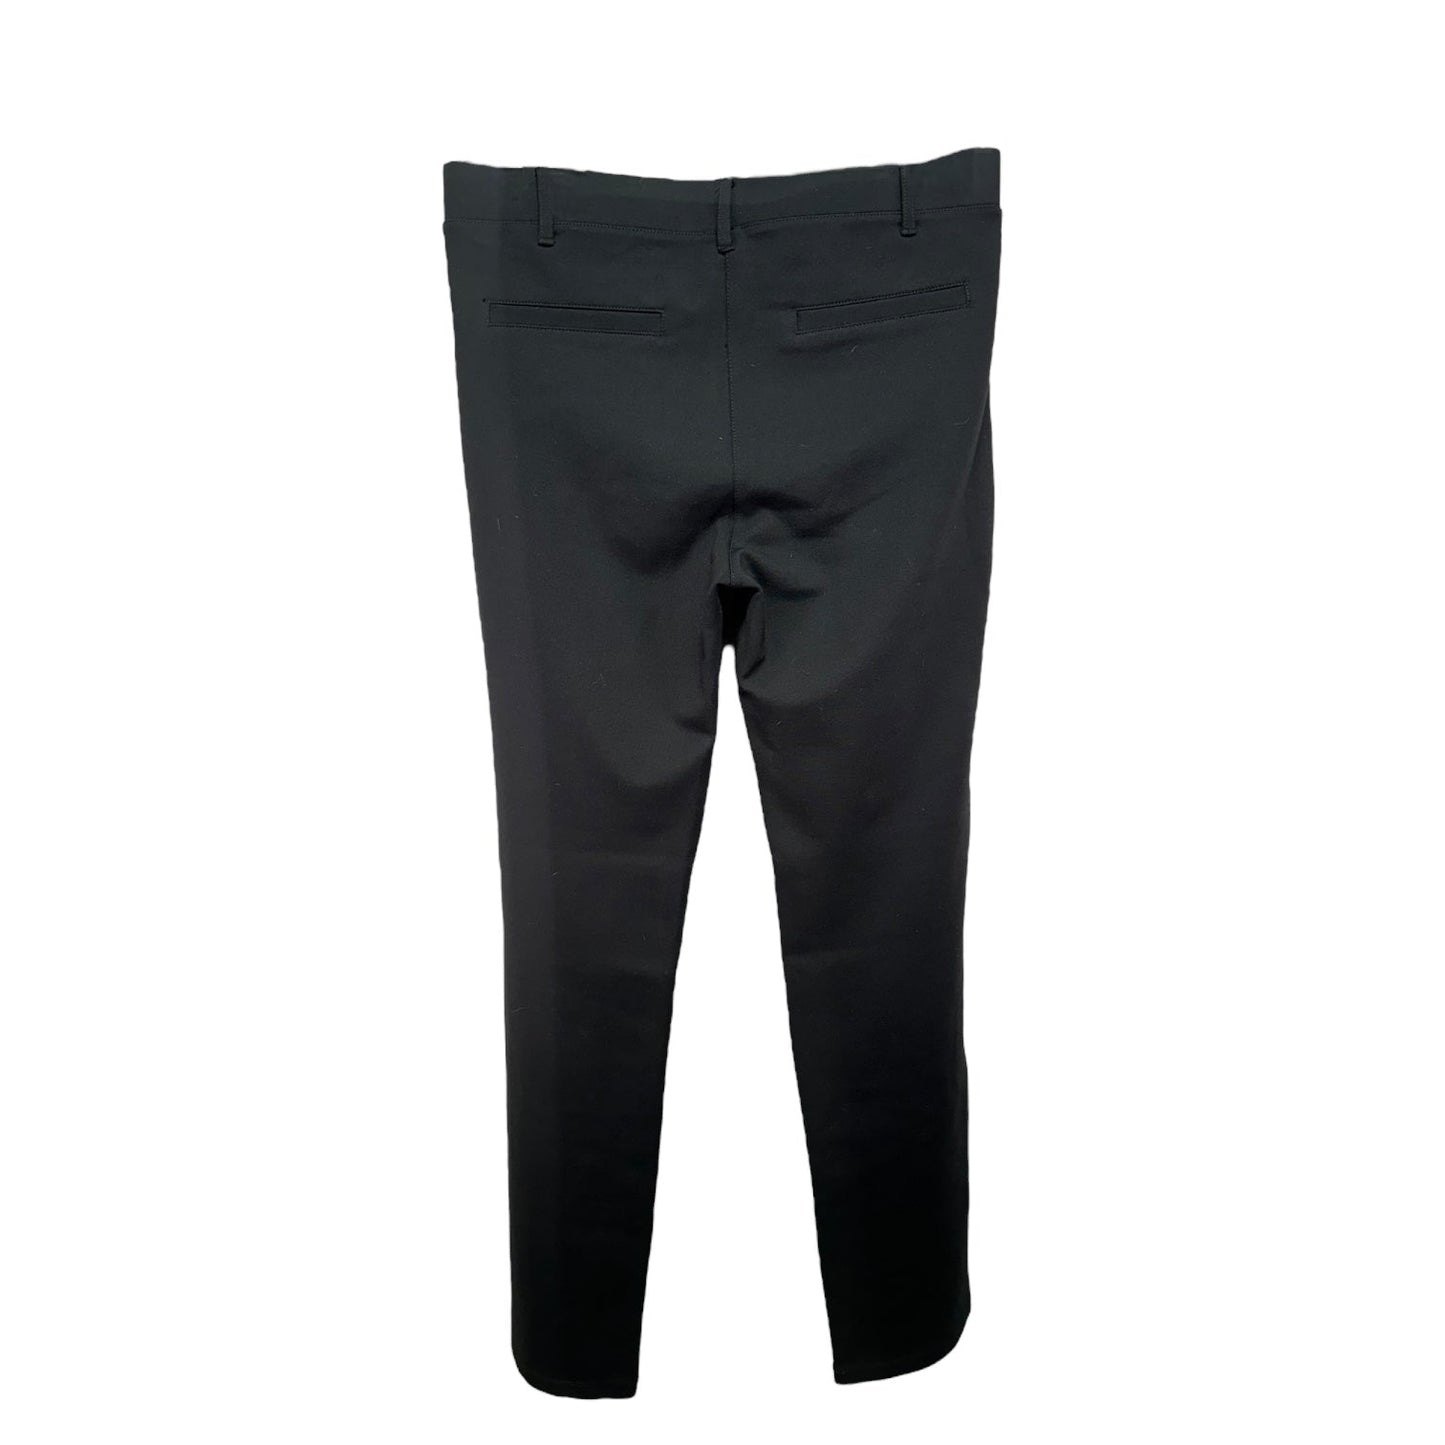 Black Pants Dress Betabrand, Size Petite  M